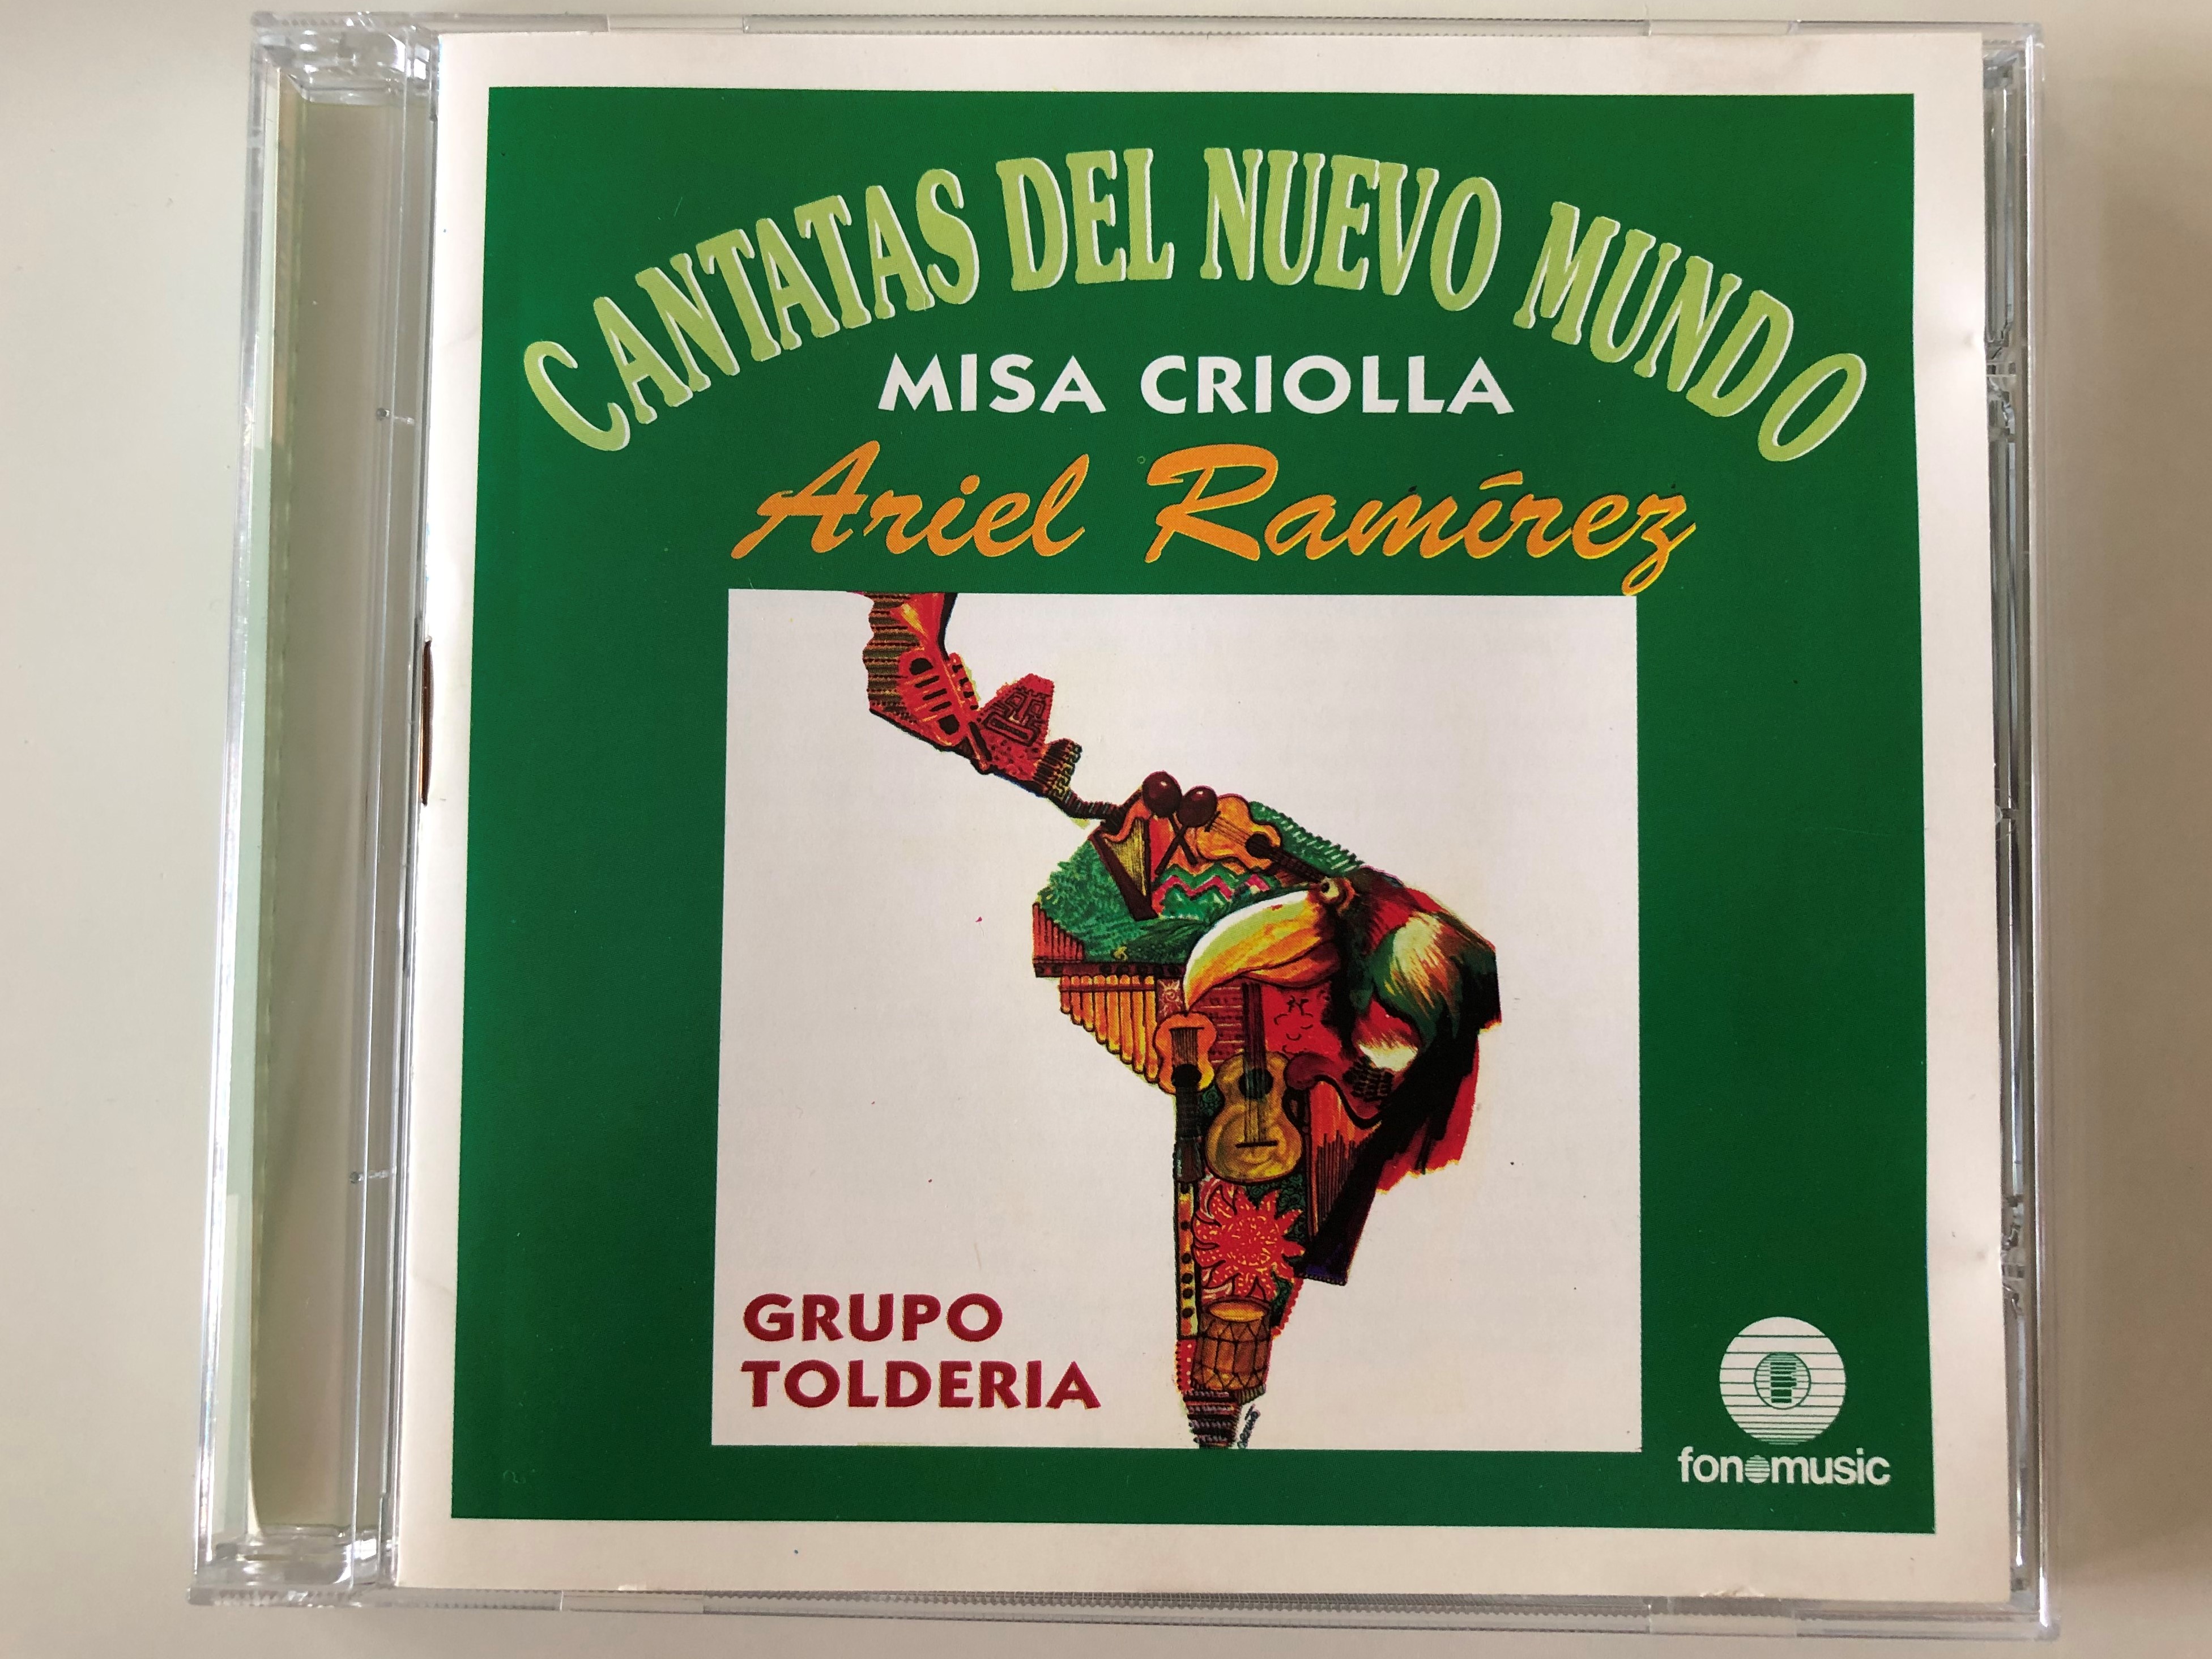 cantatas-del-nuevo-mundo-misa-criolla-ariel-ramirez-grupo-tolderia-fonomusic-audio-cd-1996-cd-1352-1-.jpg